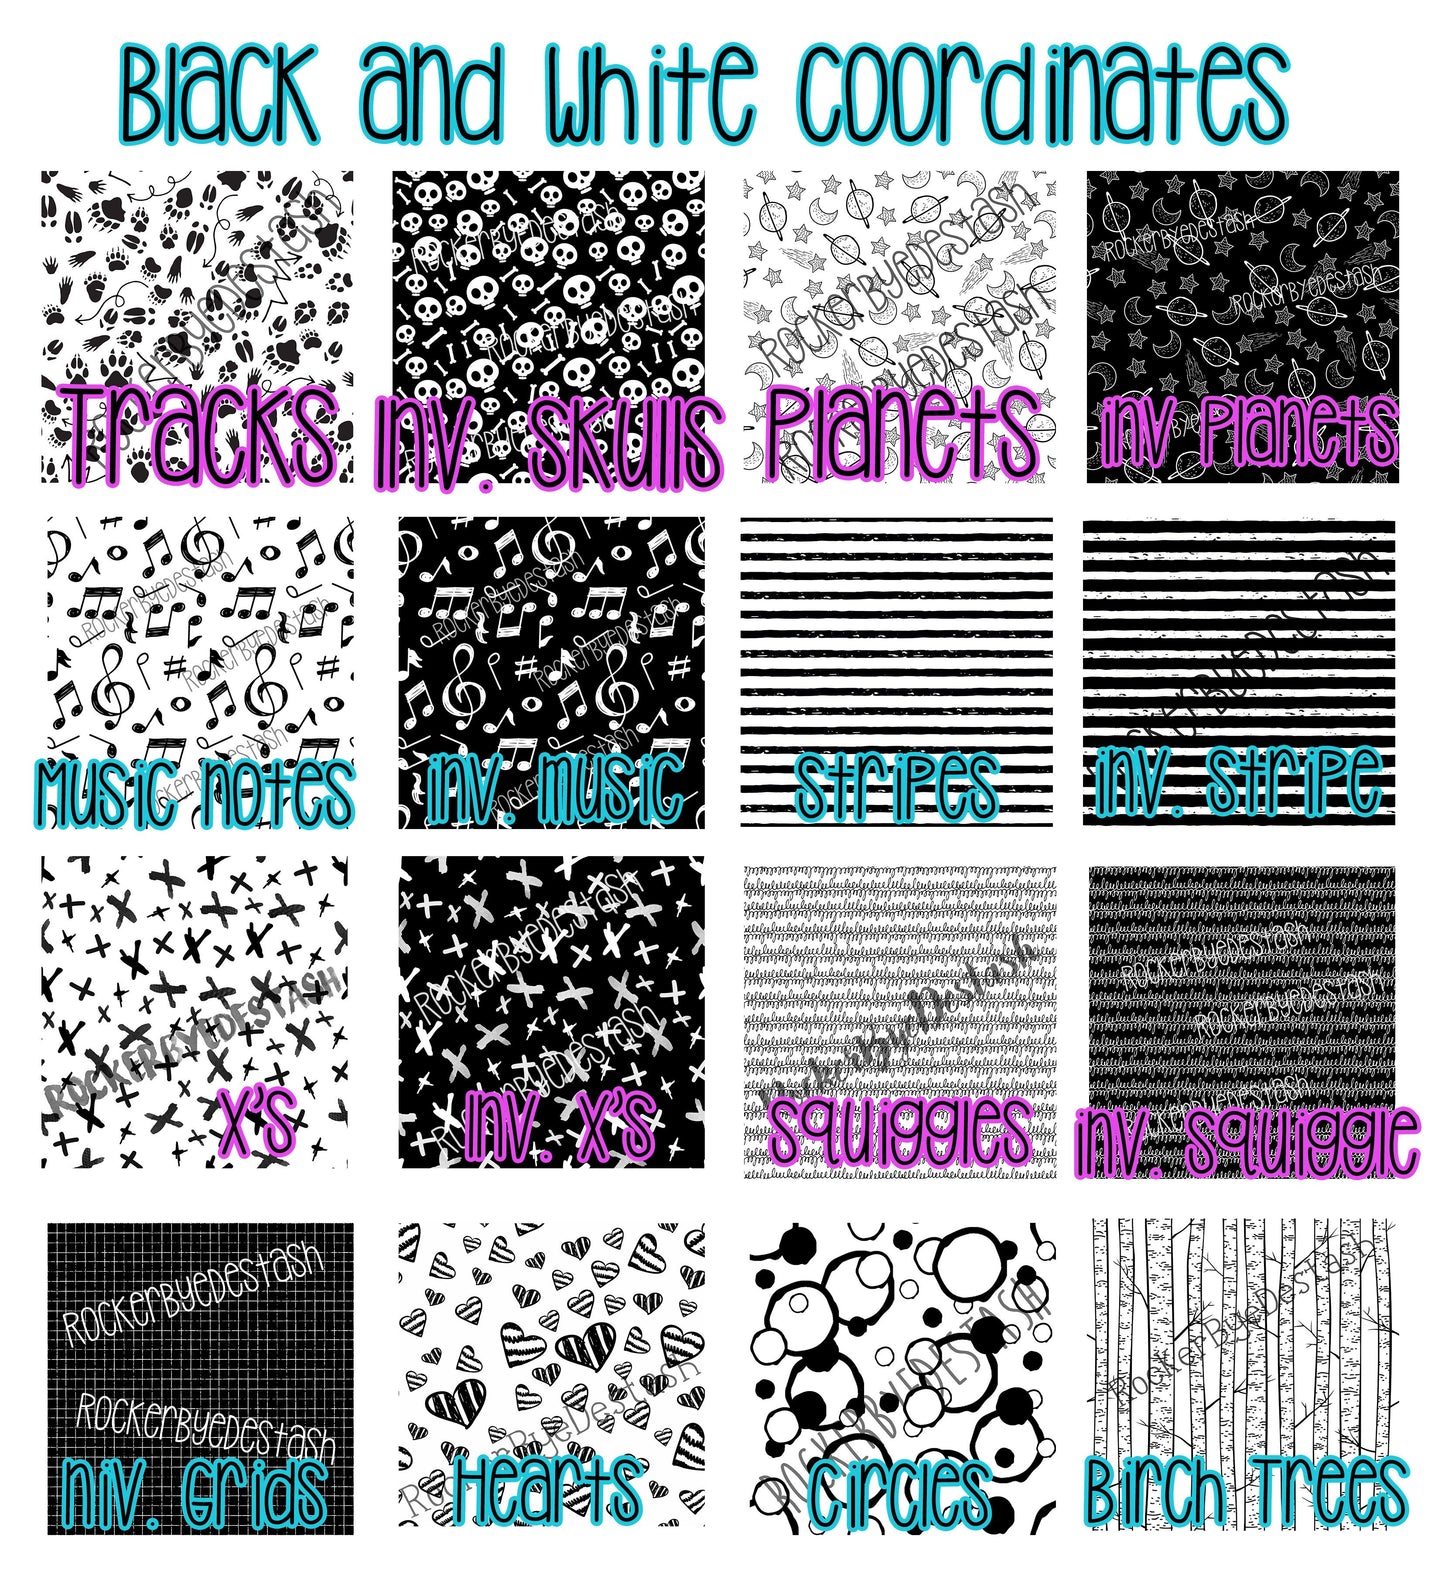 Cotton Lycra ACCENT fabric prints - retail - 1 yard per quantity Coordinate designs Black and white